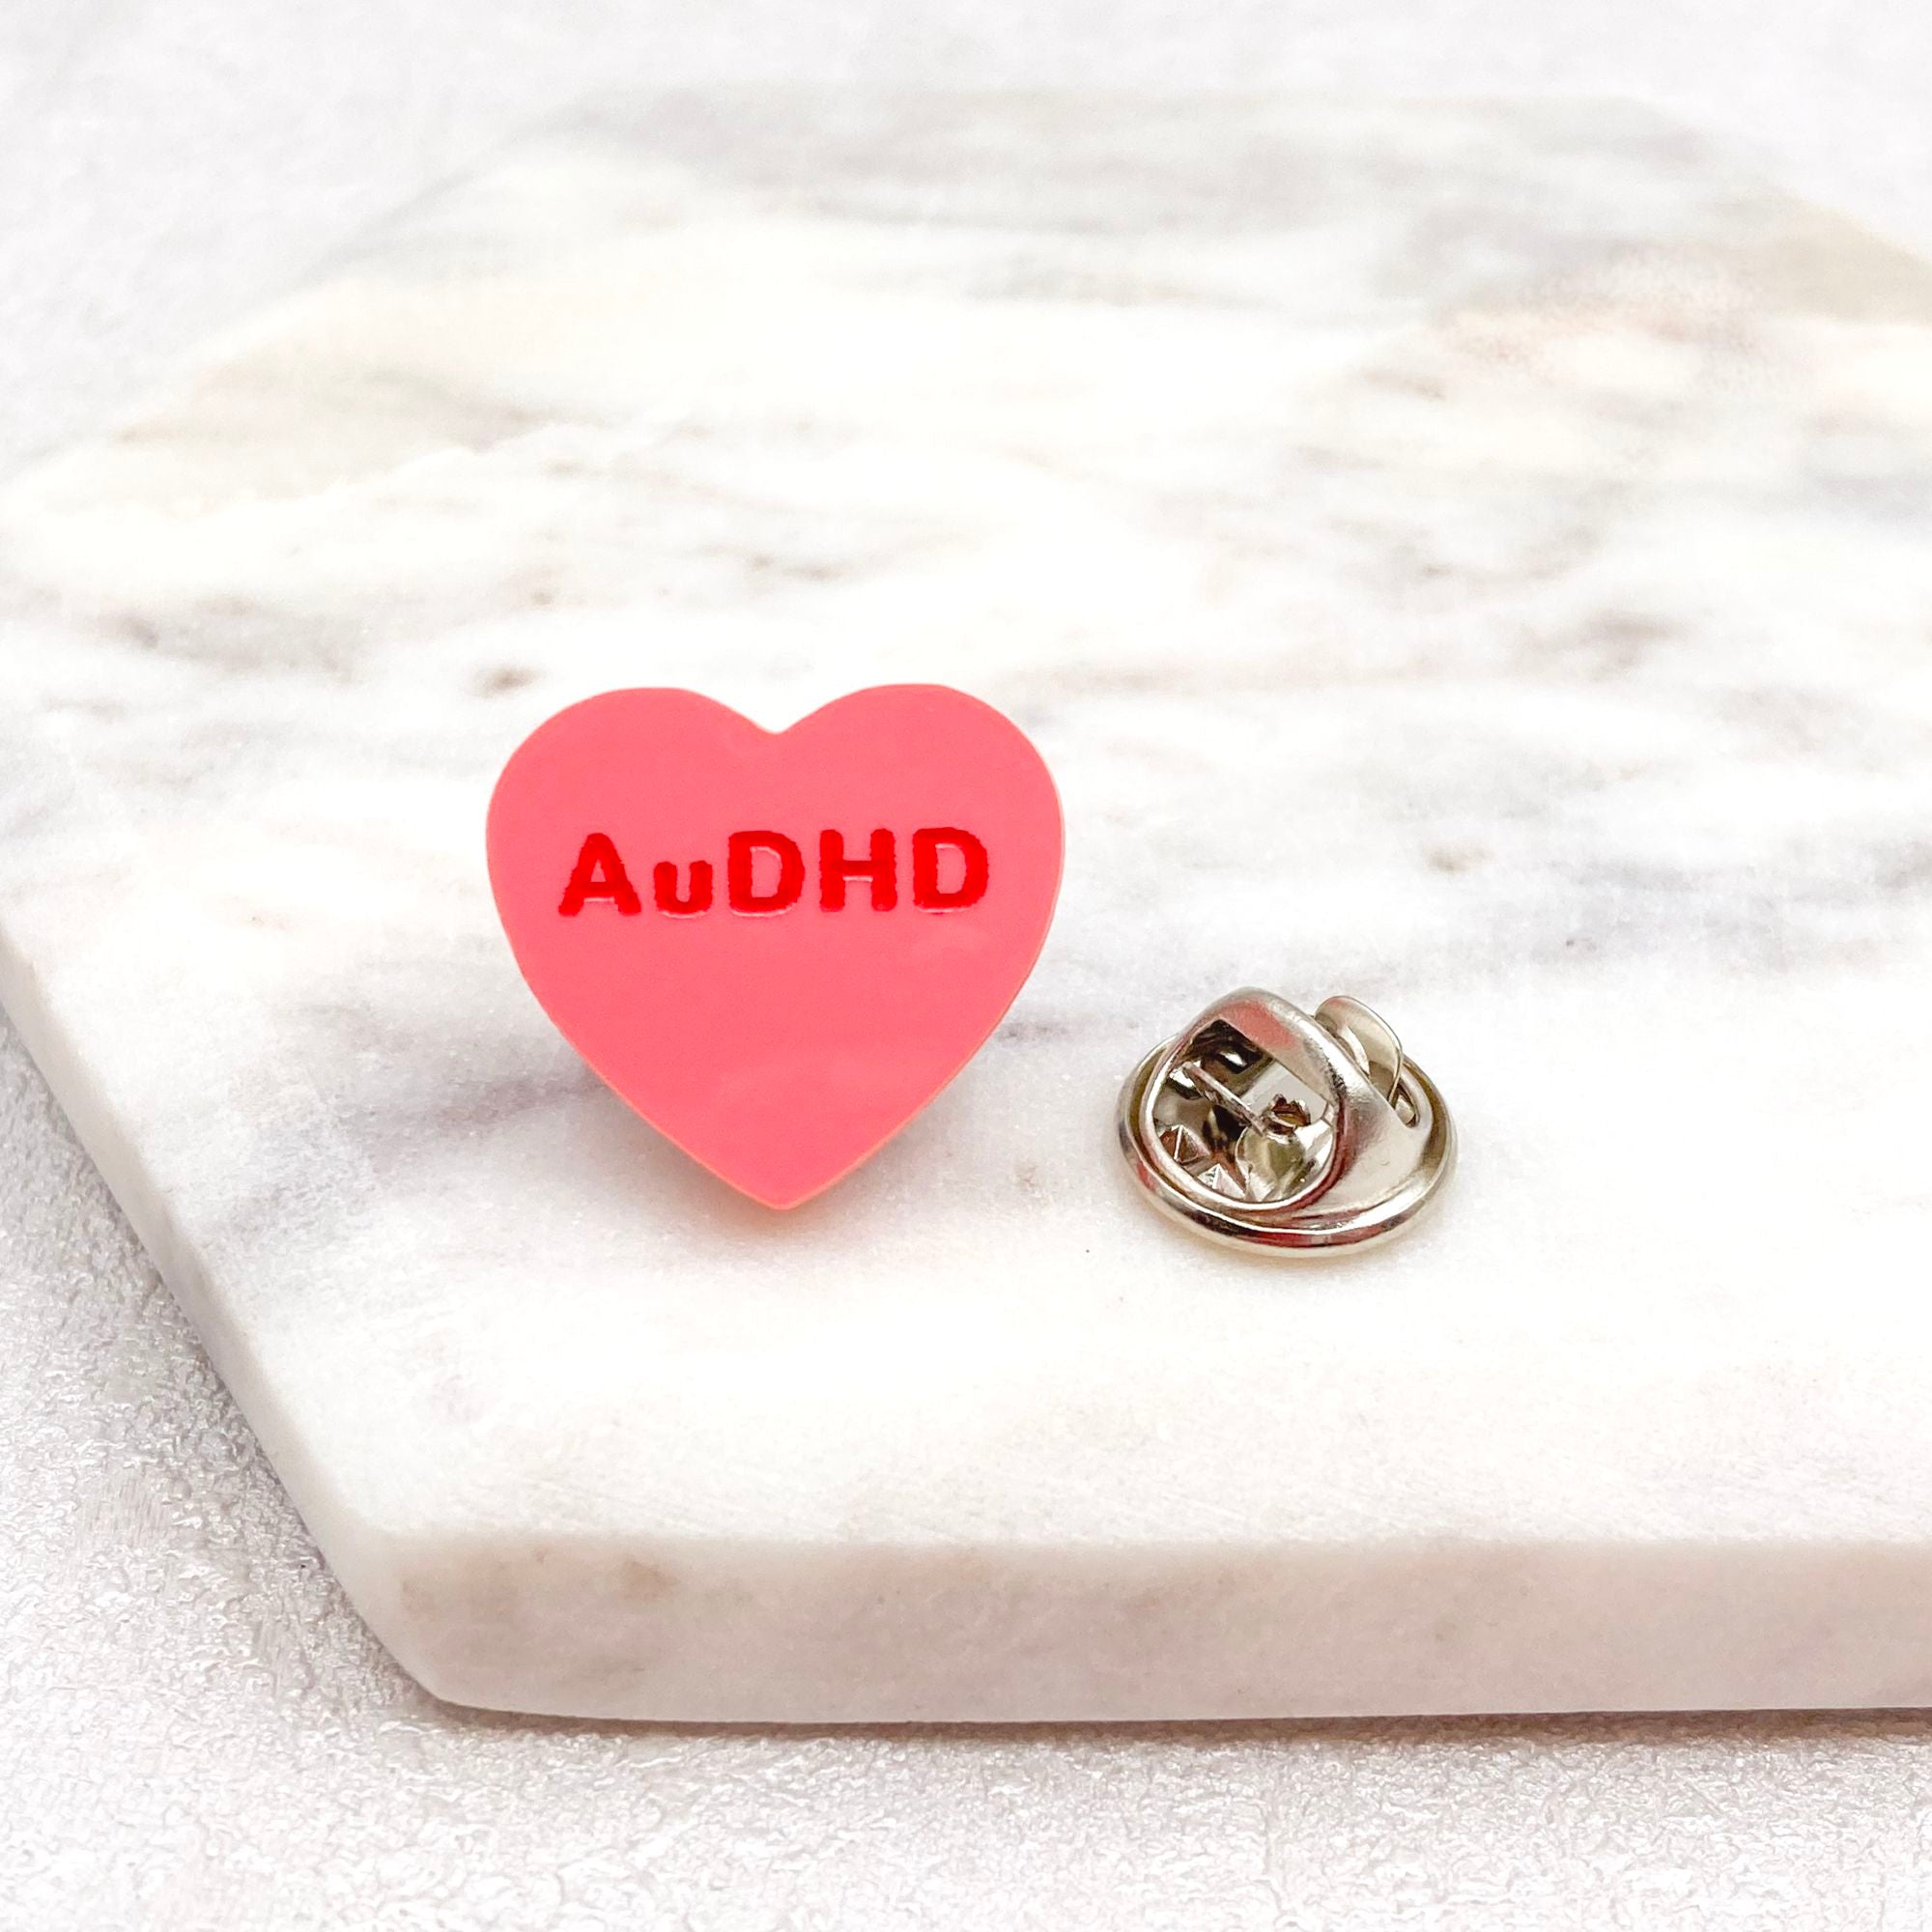 audhd awareness pin handmade present